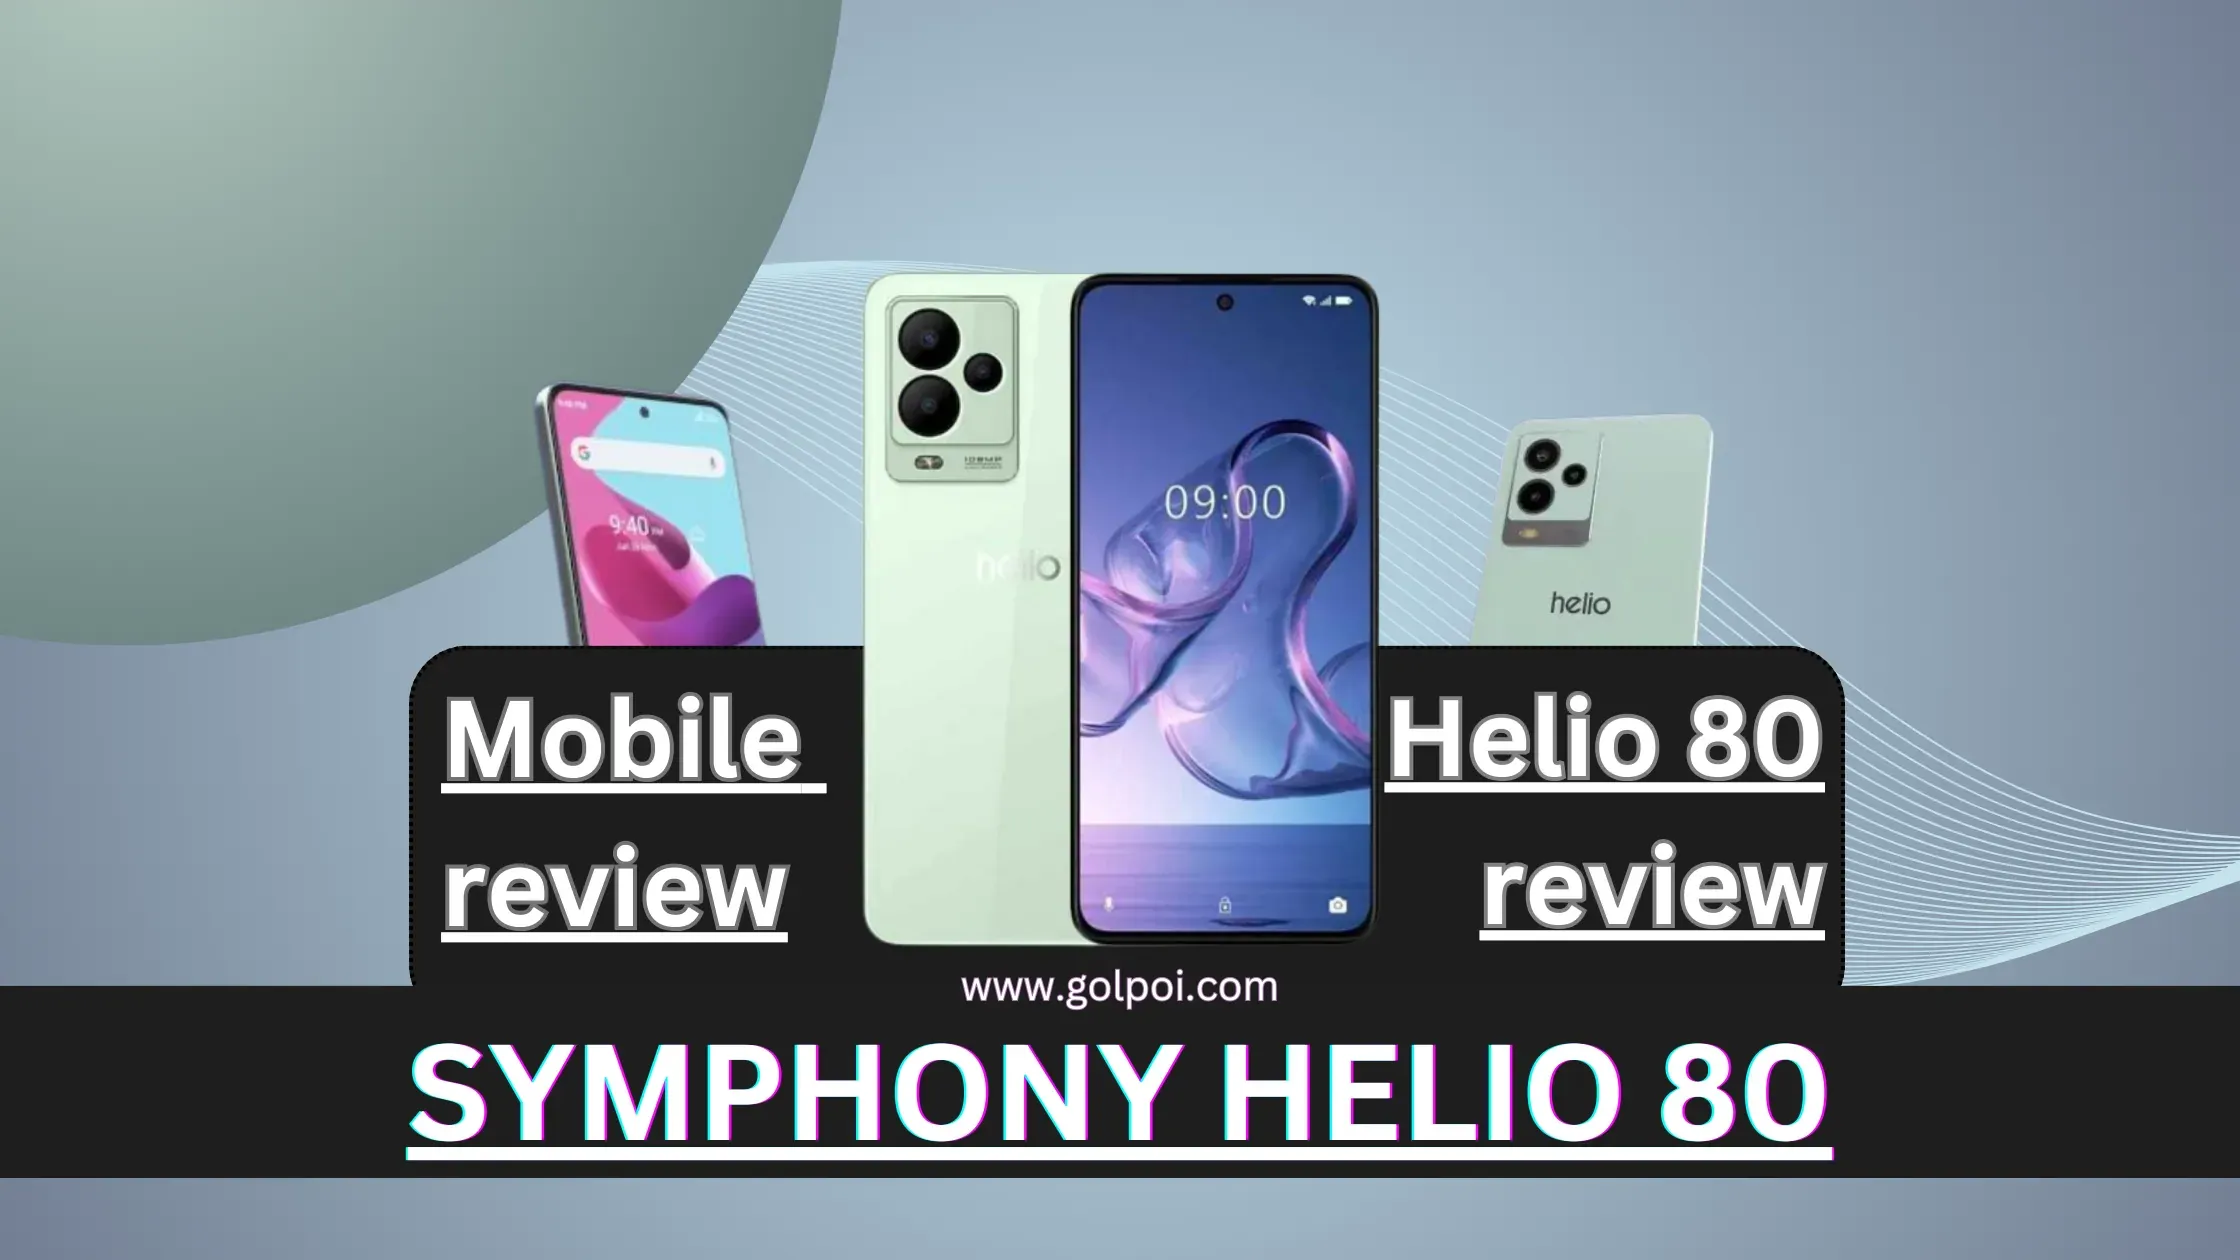 Symphony Helio 80 Review